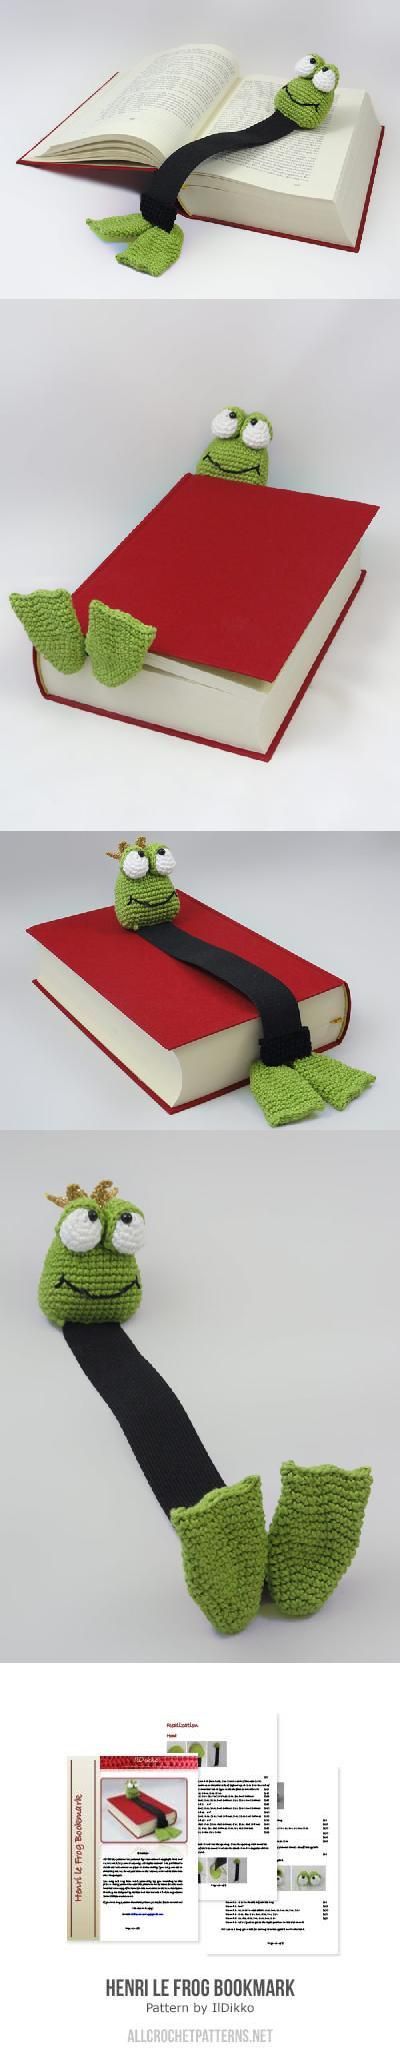 Henri Le Frog Bookmark Crochet Pattern More